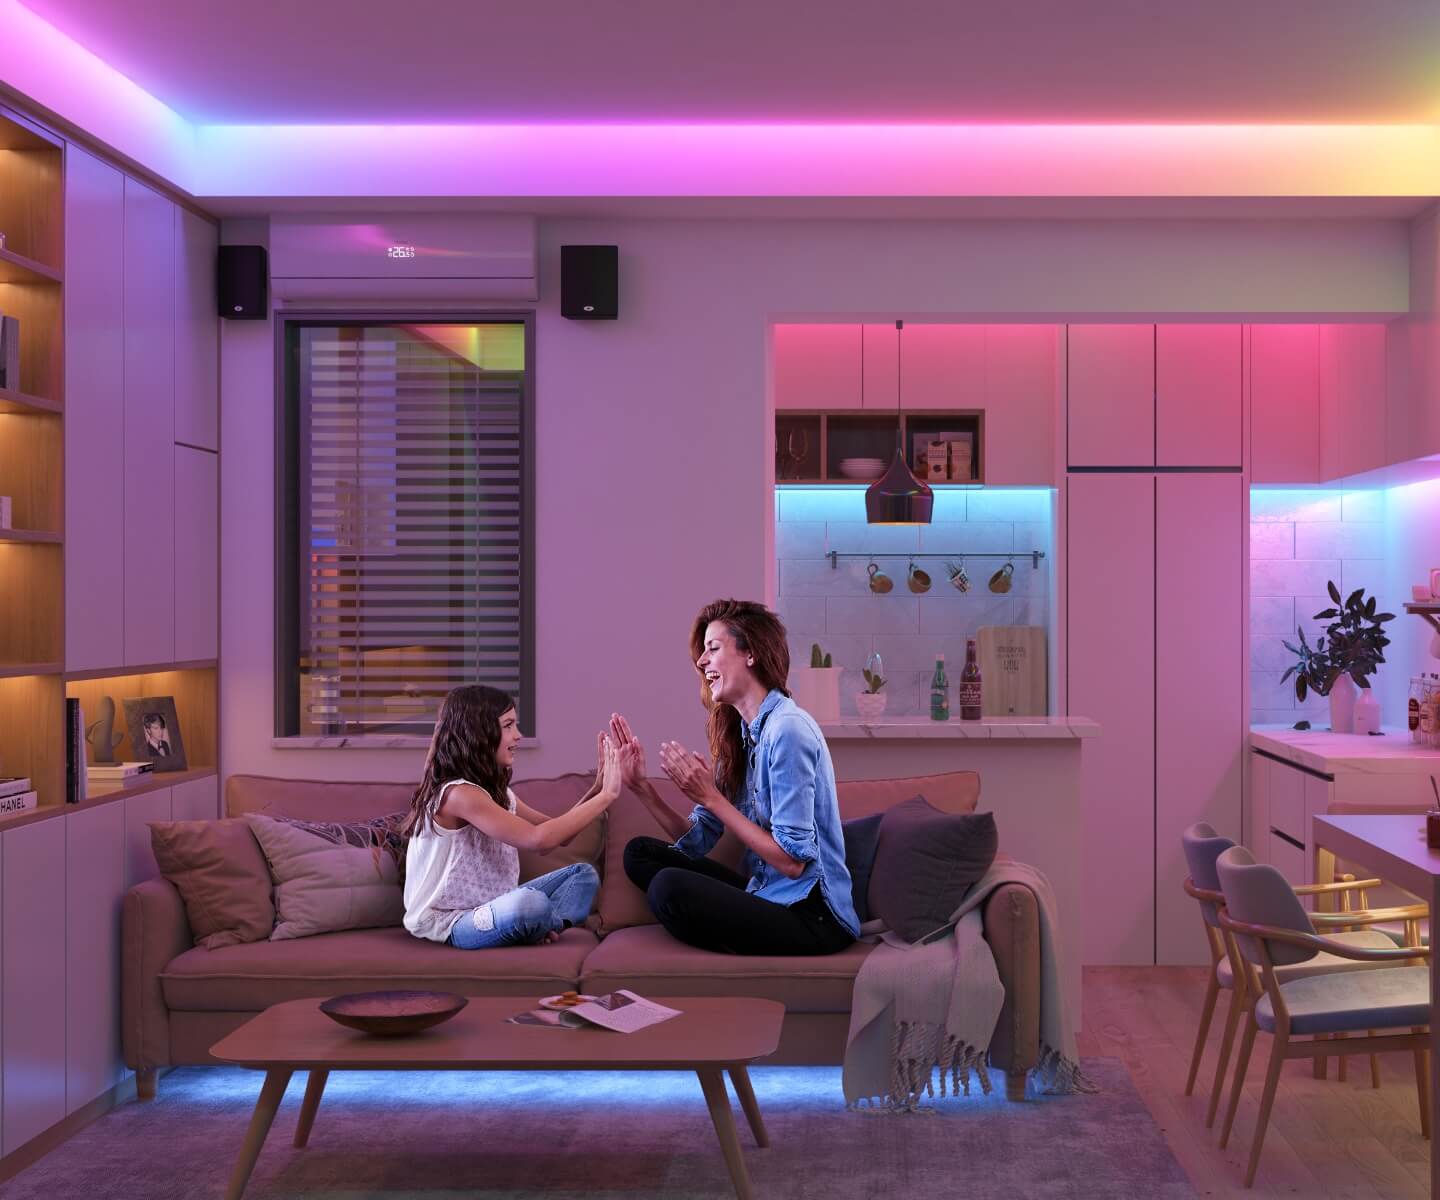 Govee Smart WiFi LED Lights 10m, RGB Strip Lights for Bedroom, TV, Kitchen,  App Control